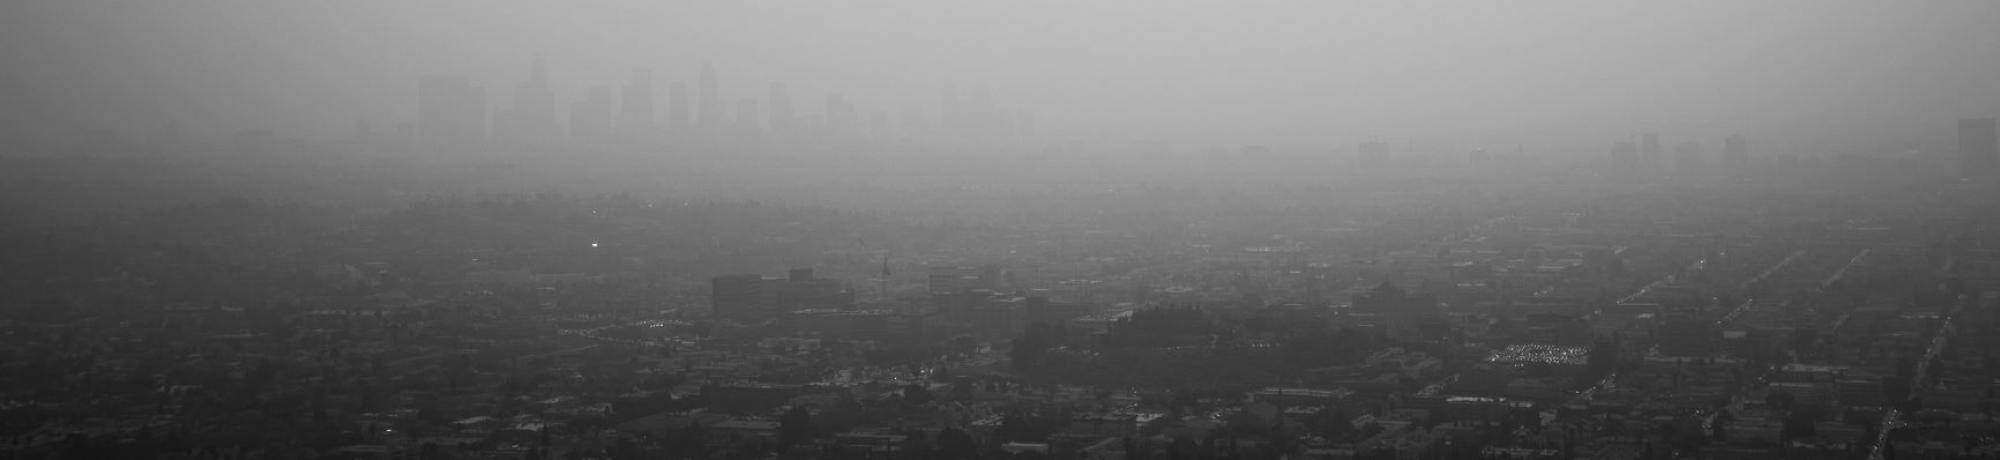 Smog over Los Angeles, California